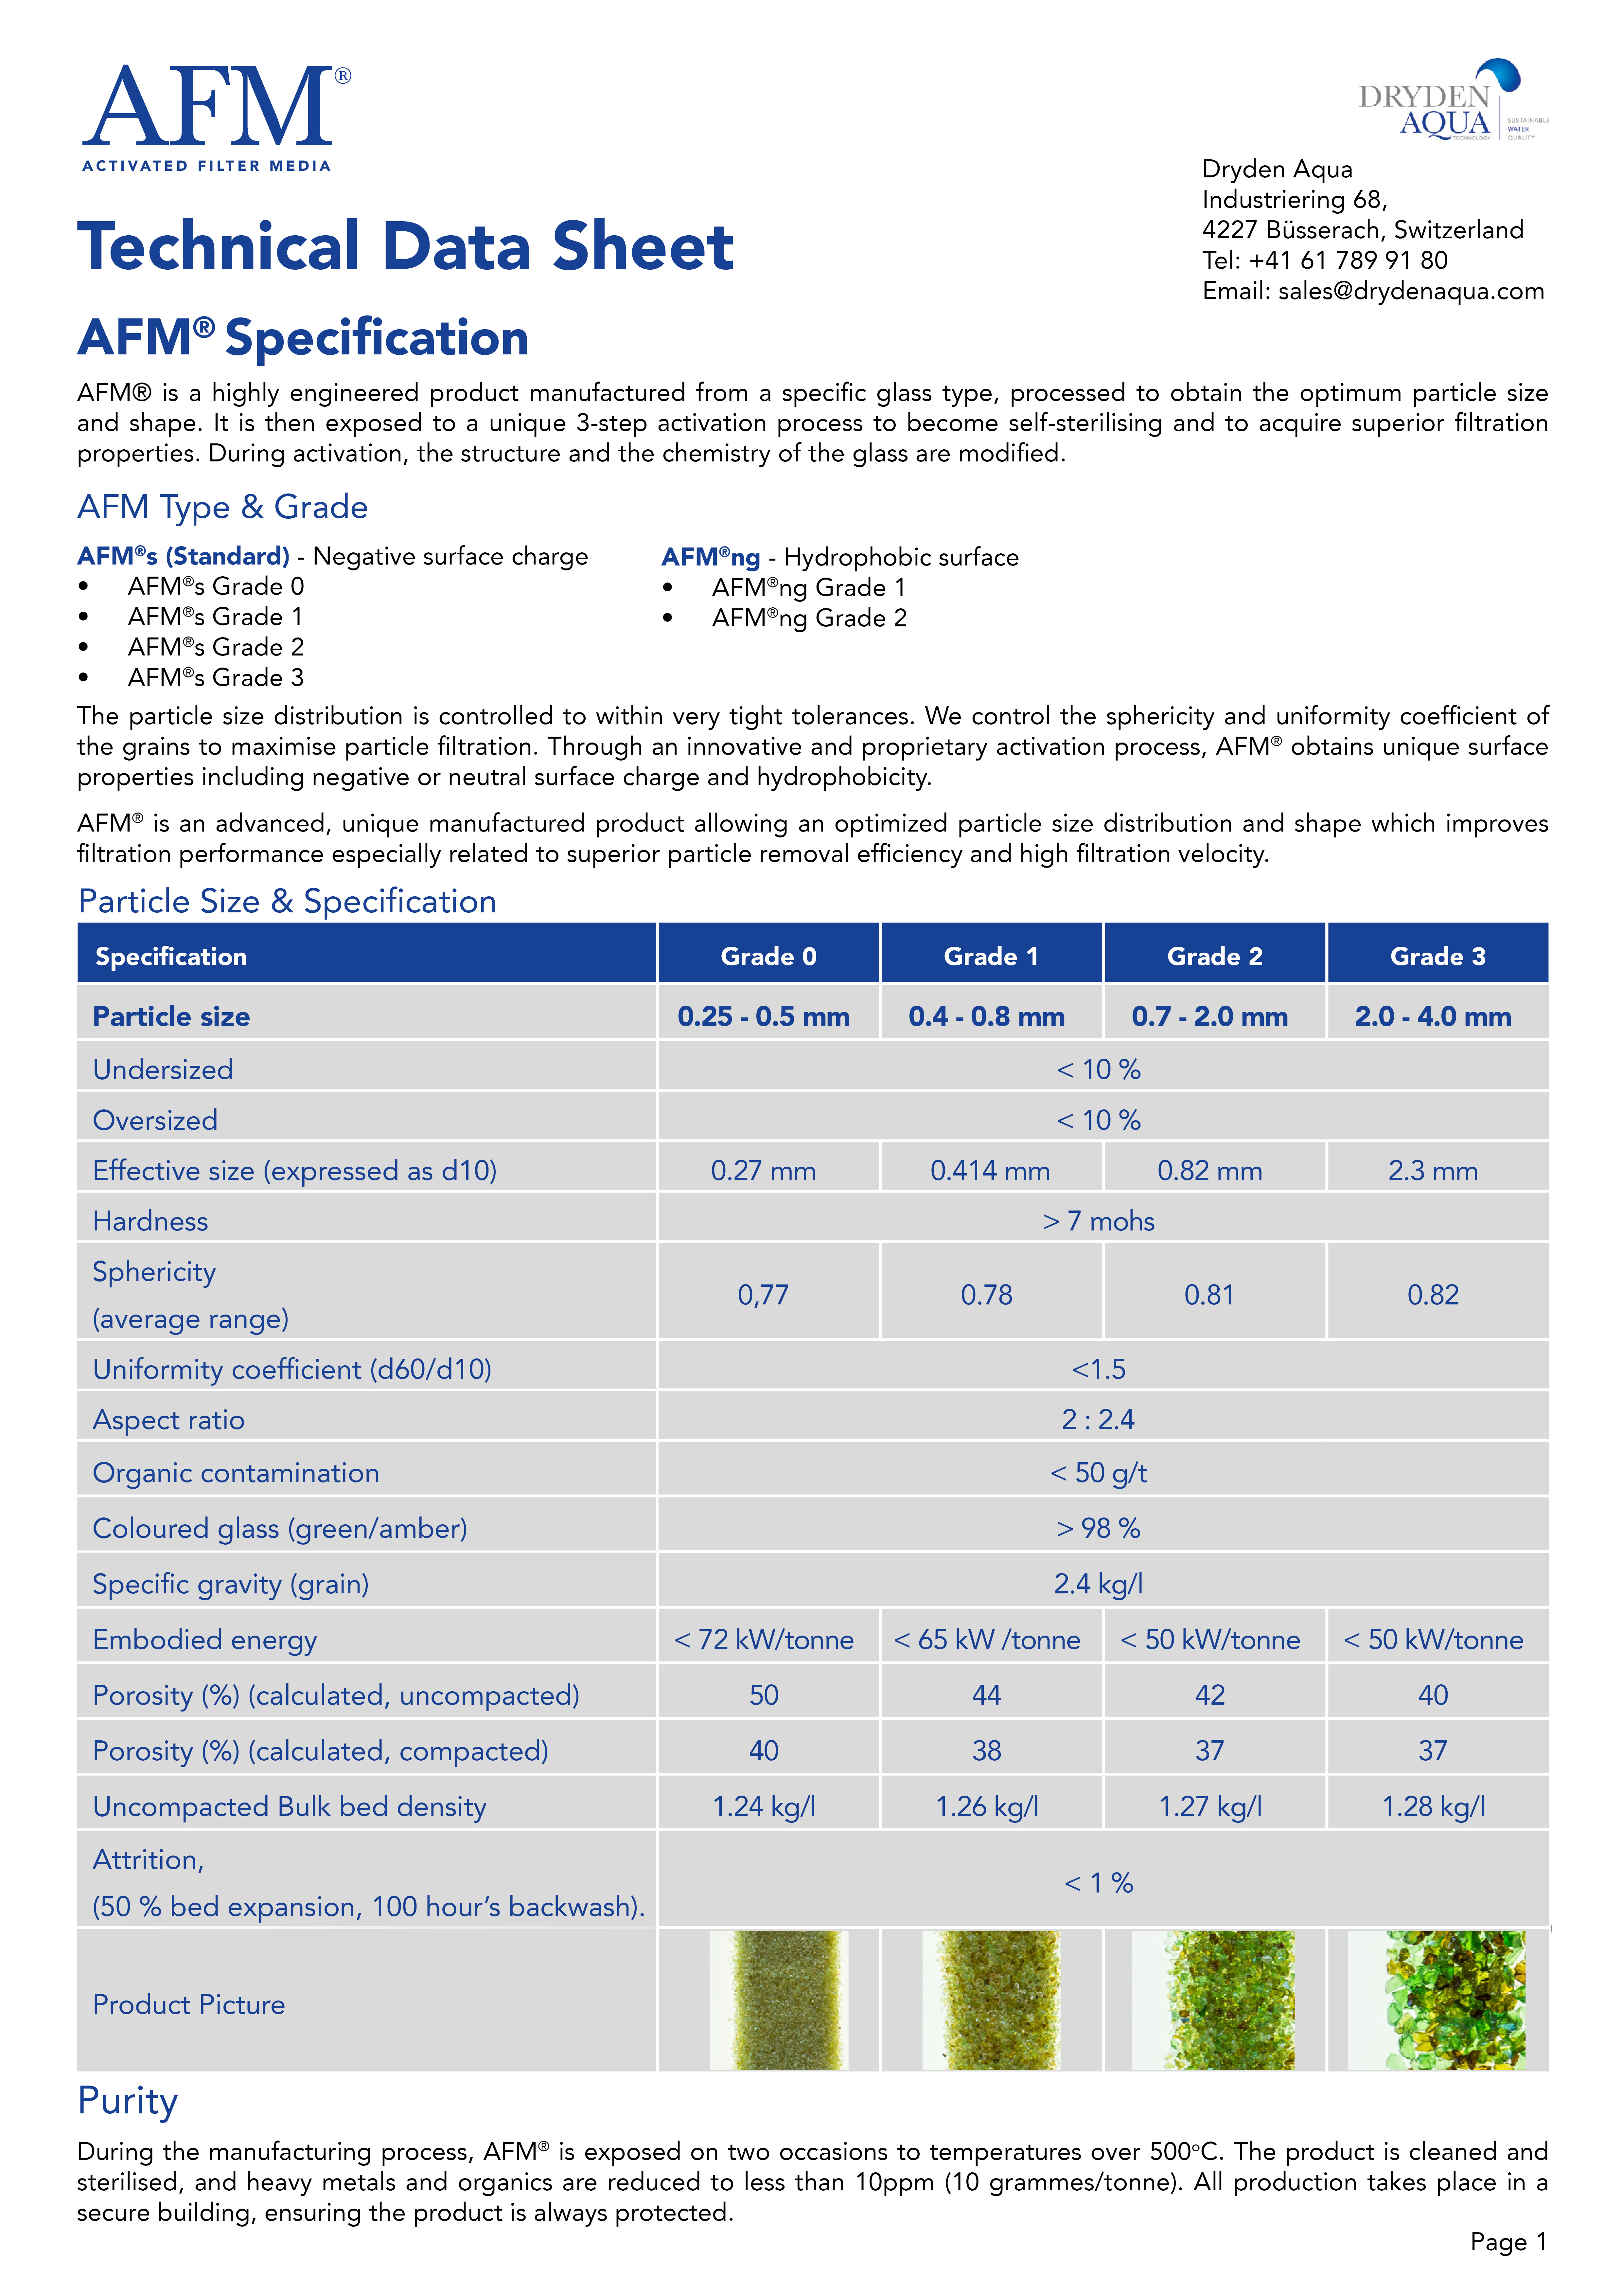 AFM Water Treatment - Technical Data Sheet